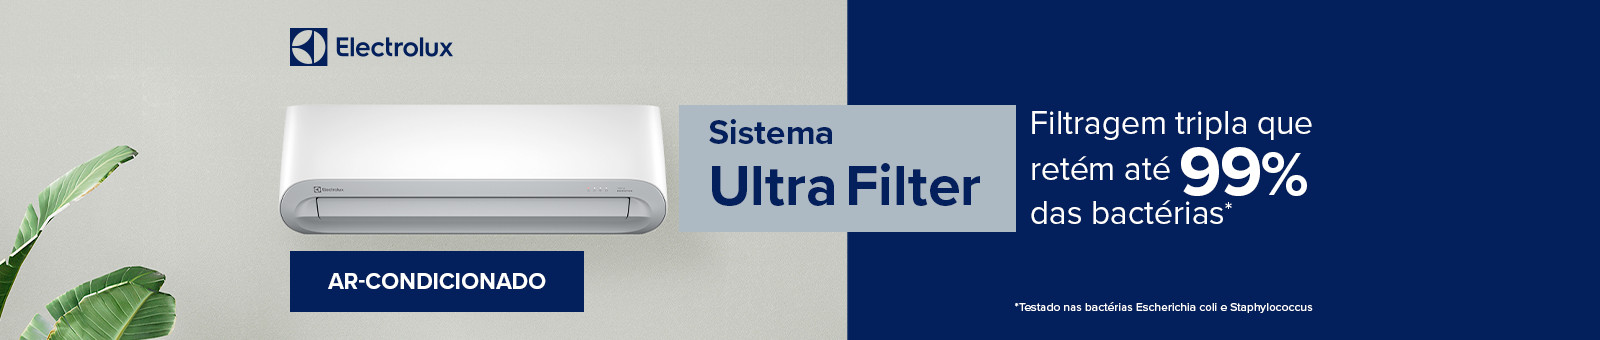 Electrolux. Ar-Condicionado Sistema Ultra Filter. Filtragem tripla que retém até 99% das bactérias. Testado nas bactérias Escherichla coll o Staphylococcus.